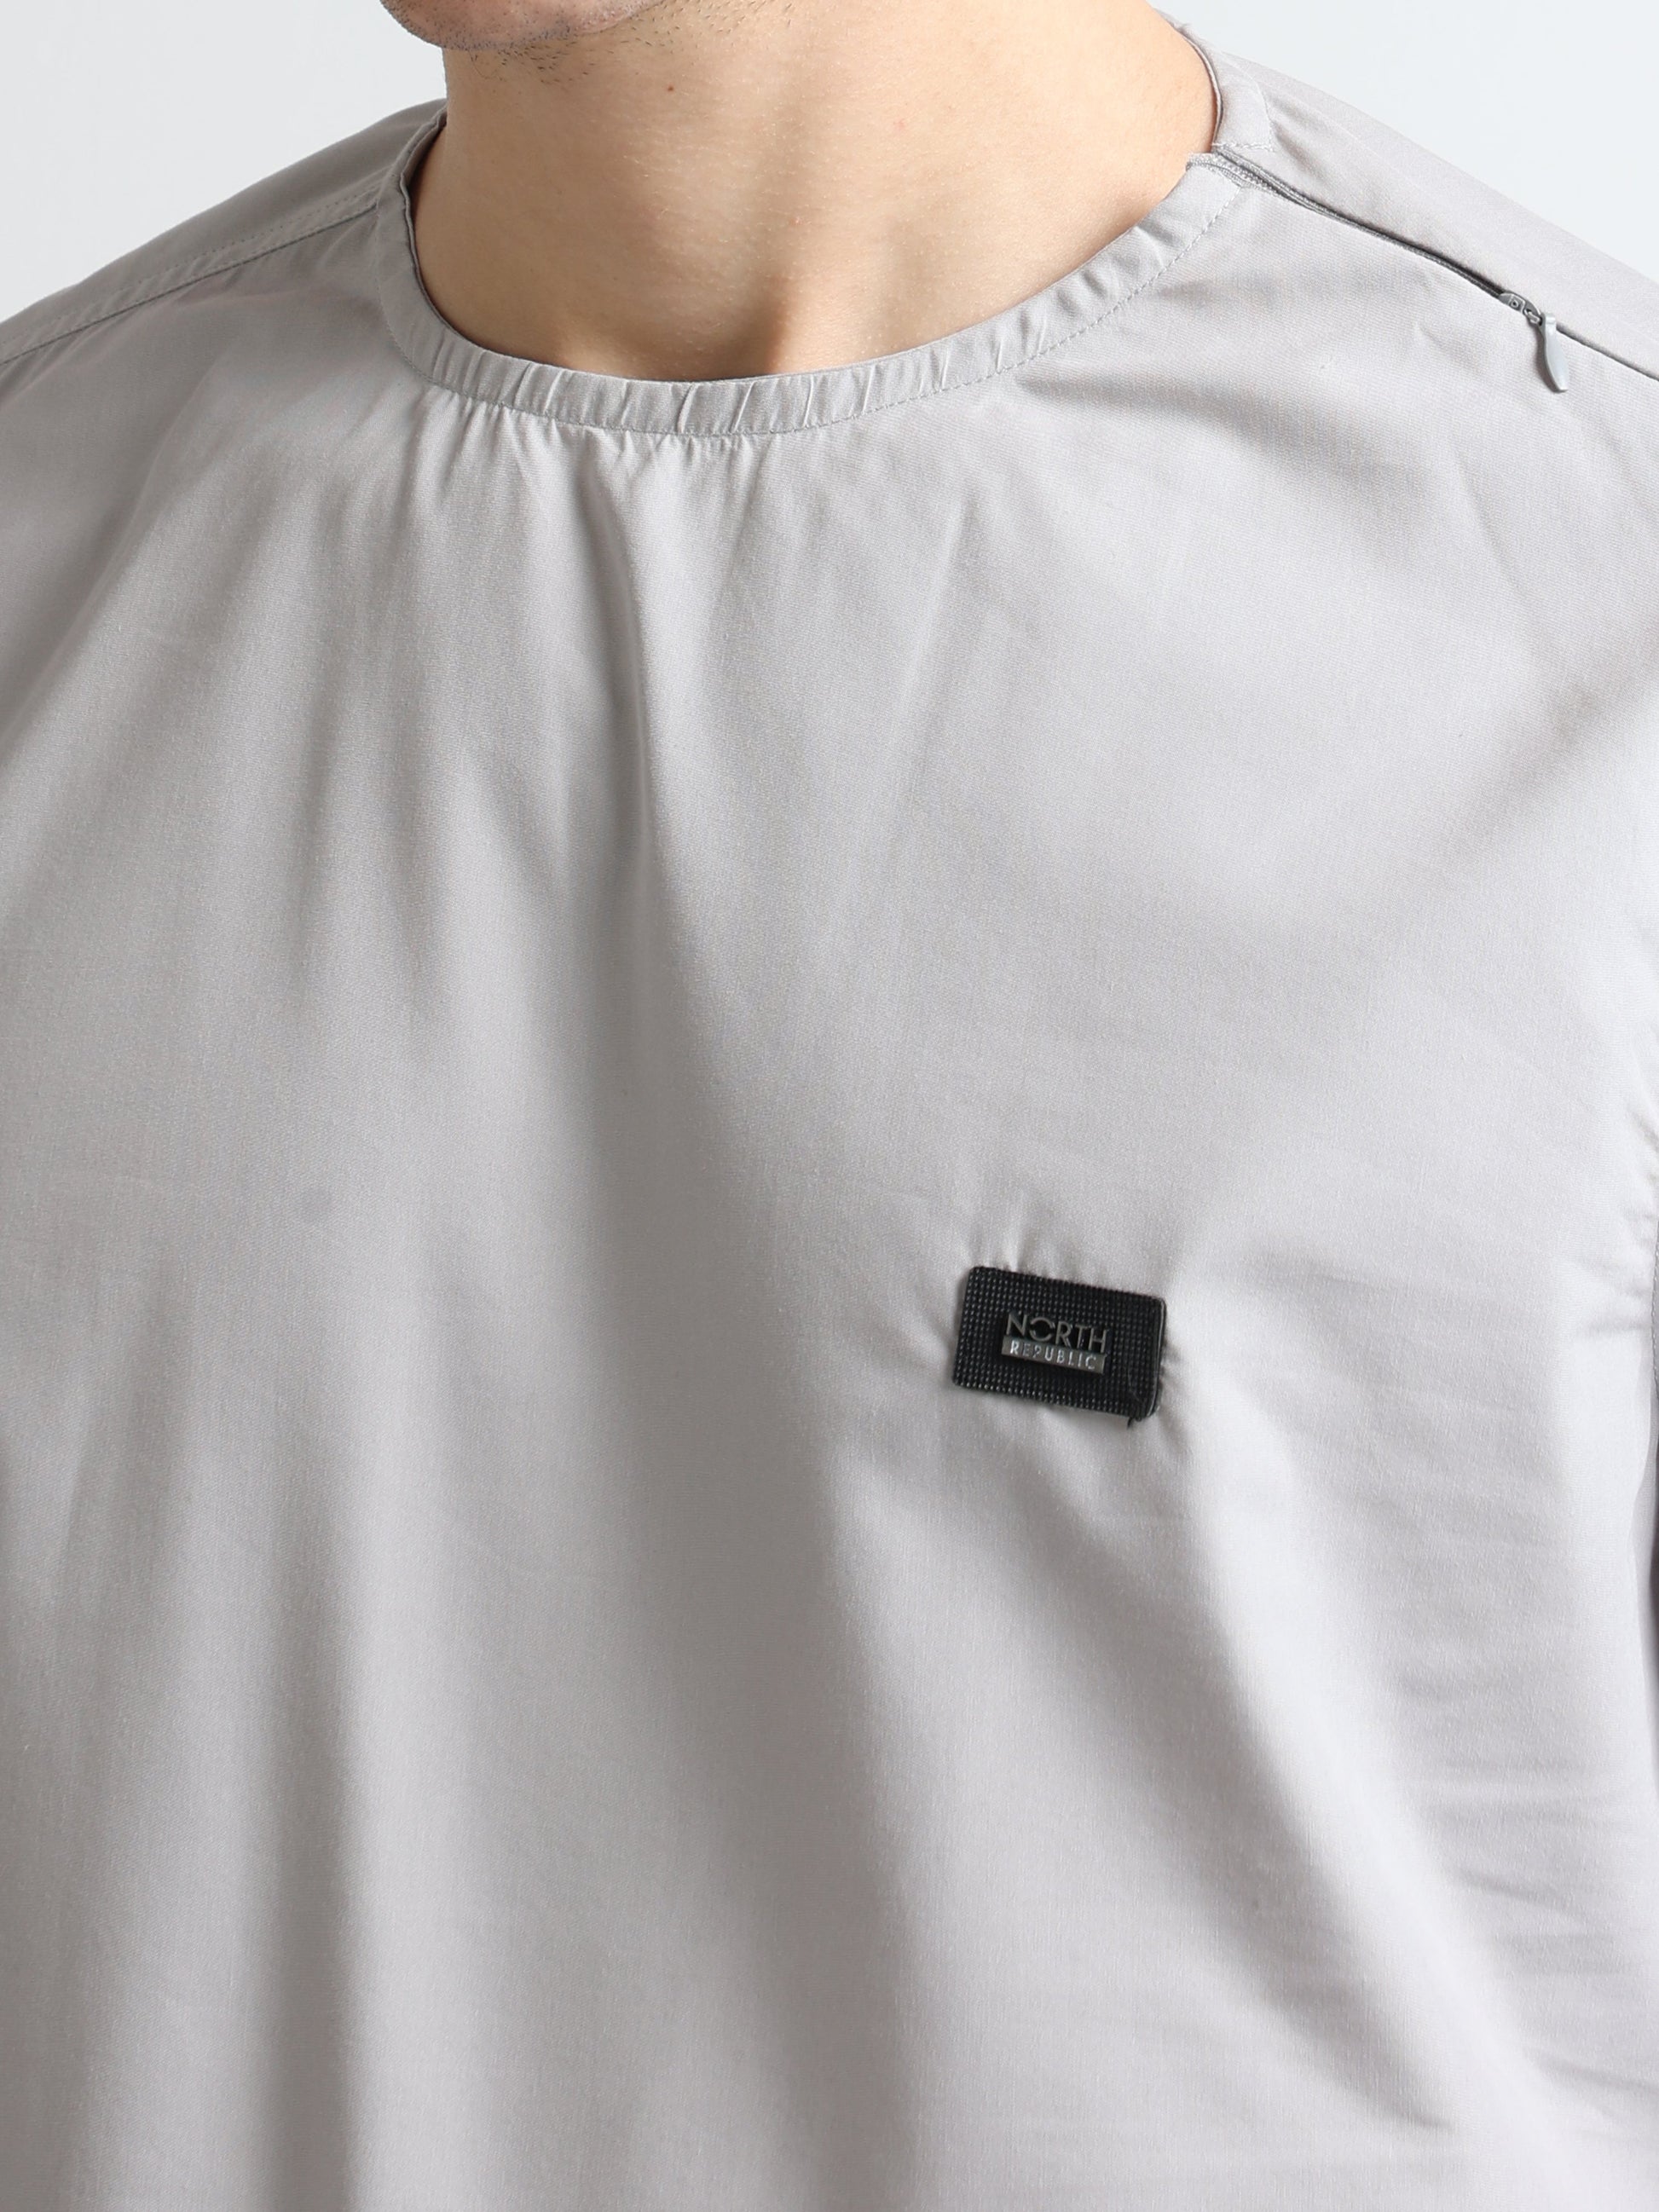 Buy Stylish Side Pocket Crew Neck Mens Shirt Online.